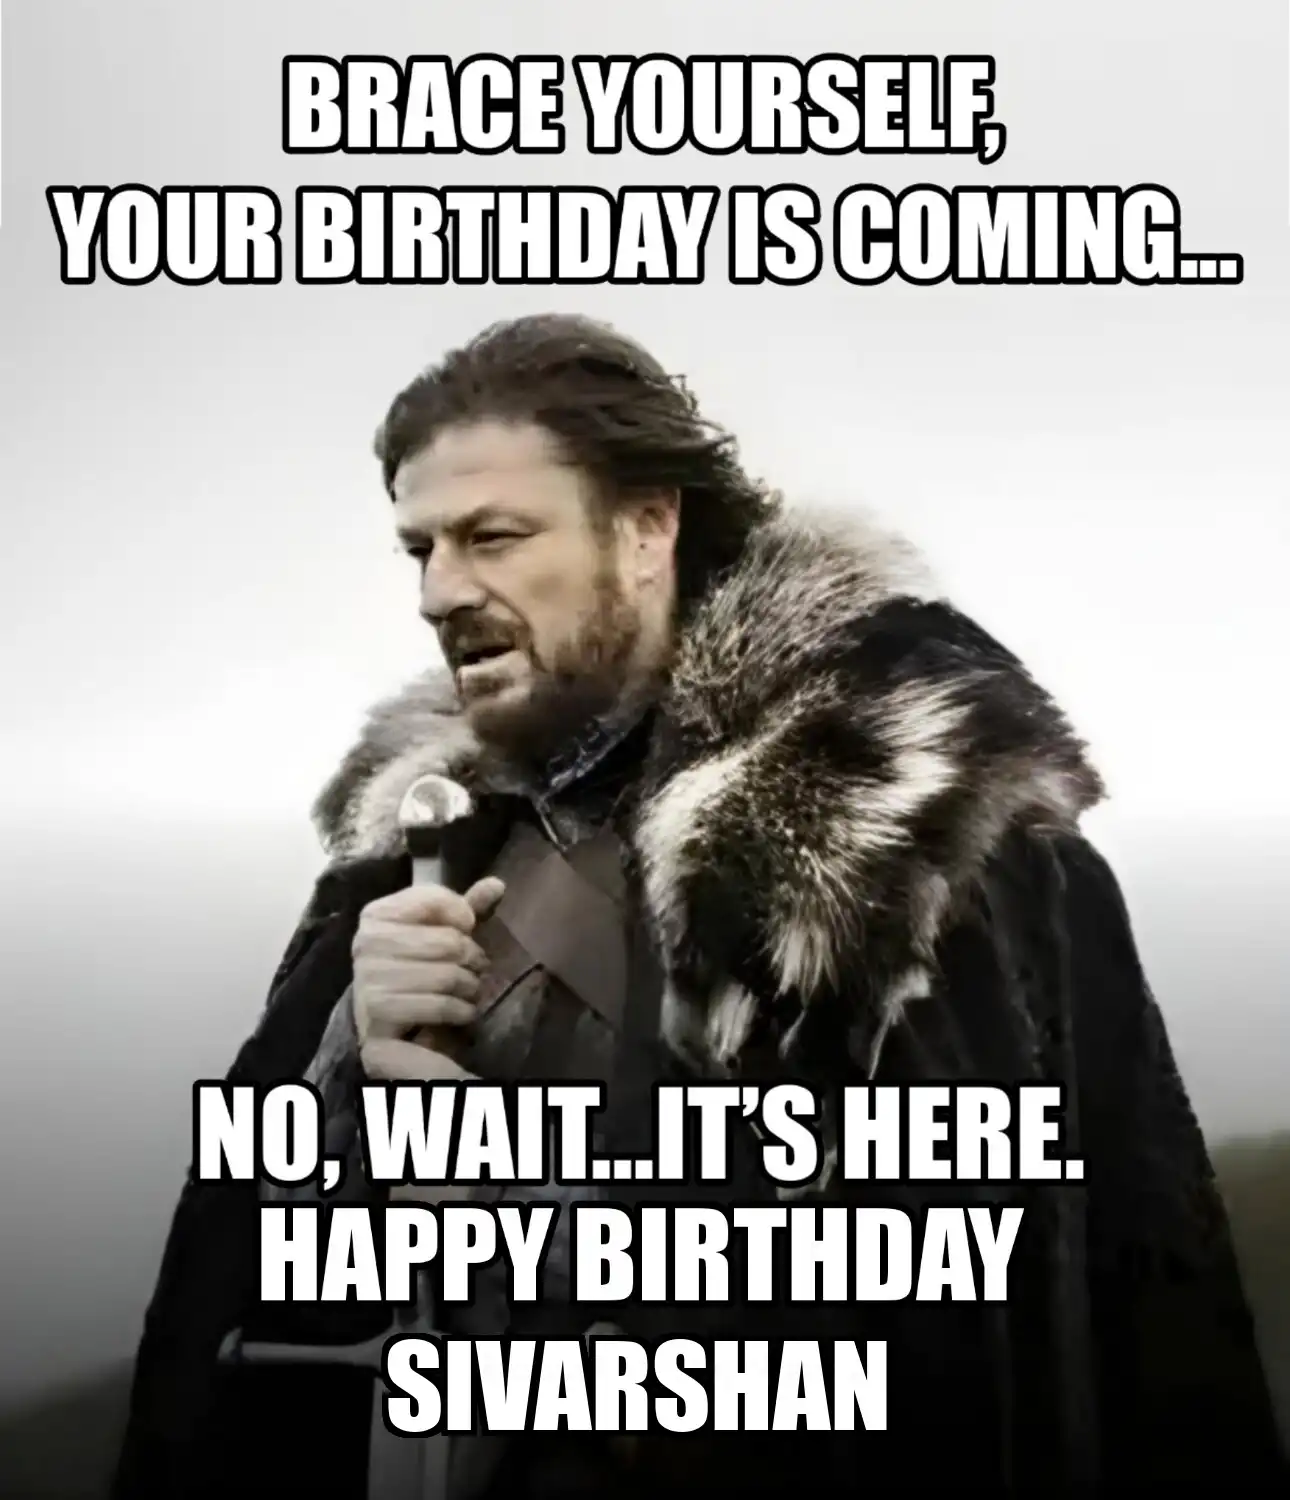 Happy Birthday Sivarshan Brace Yourself Your Birthday Is Coming Meme